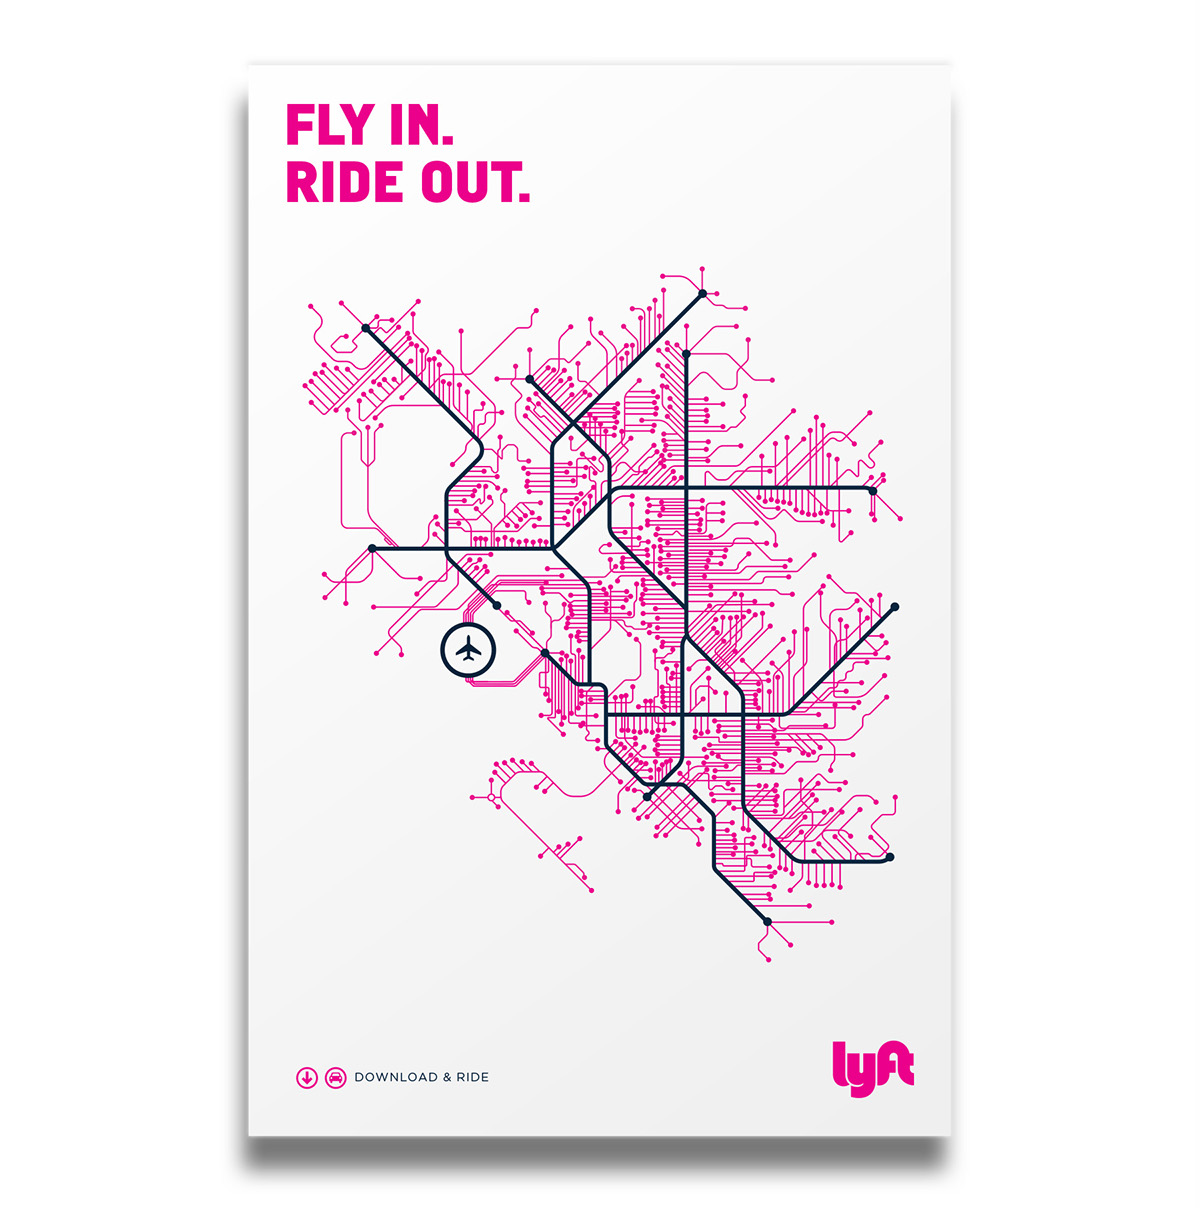 lyft Ridesharing Transit transportation maps grid subway highway roads Uber car bus plane Auto